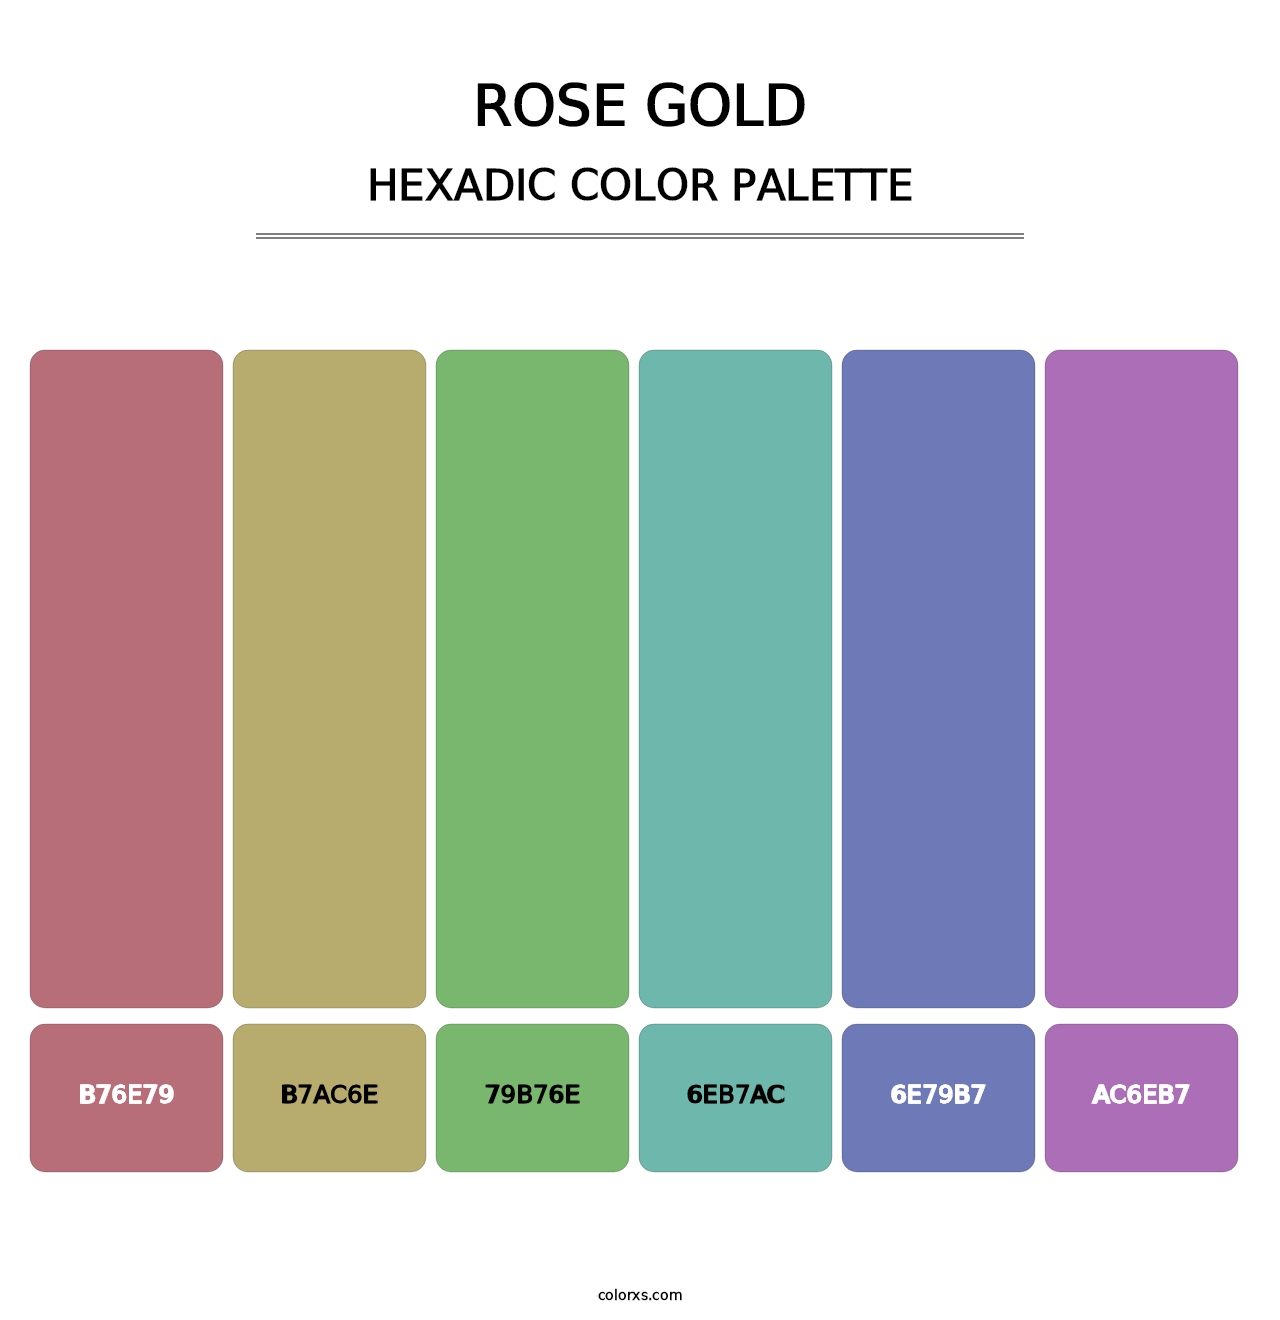 Rose Gold - Hexadic Color Palette